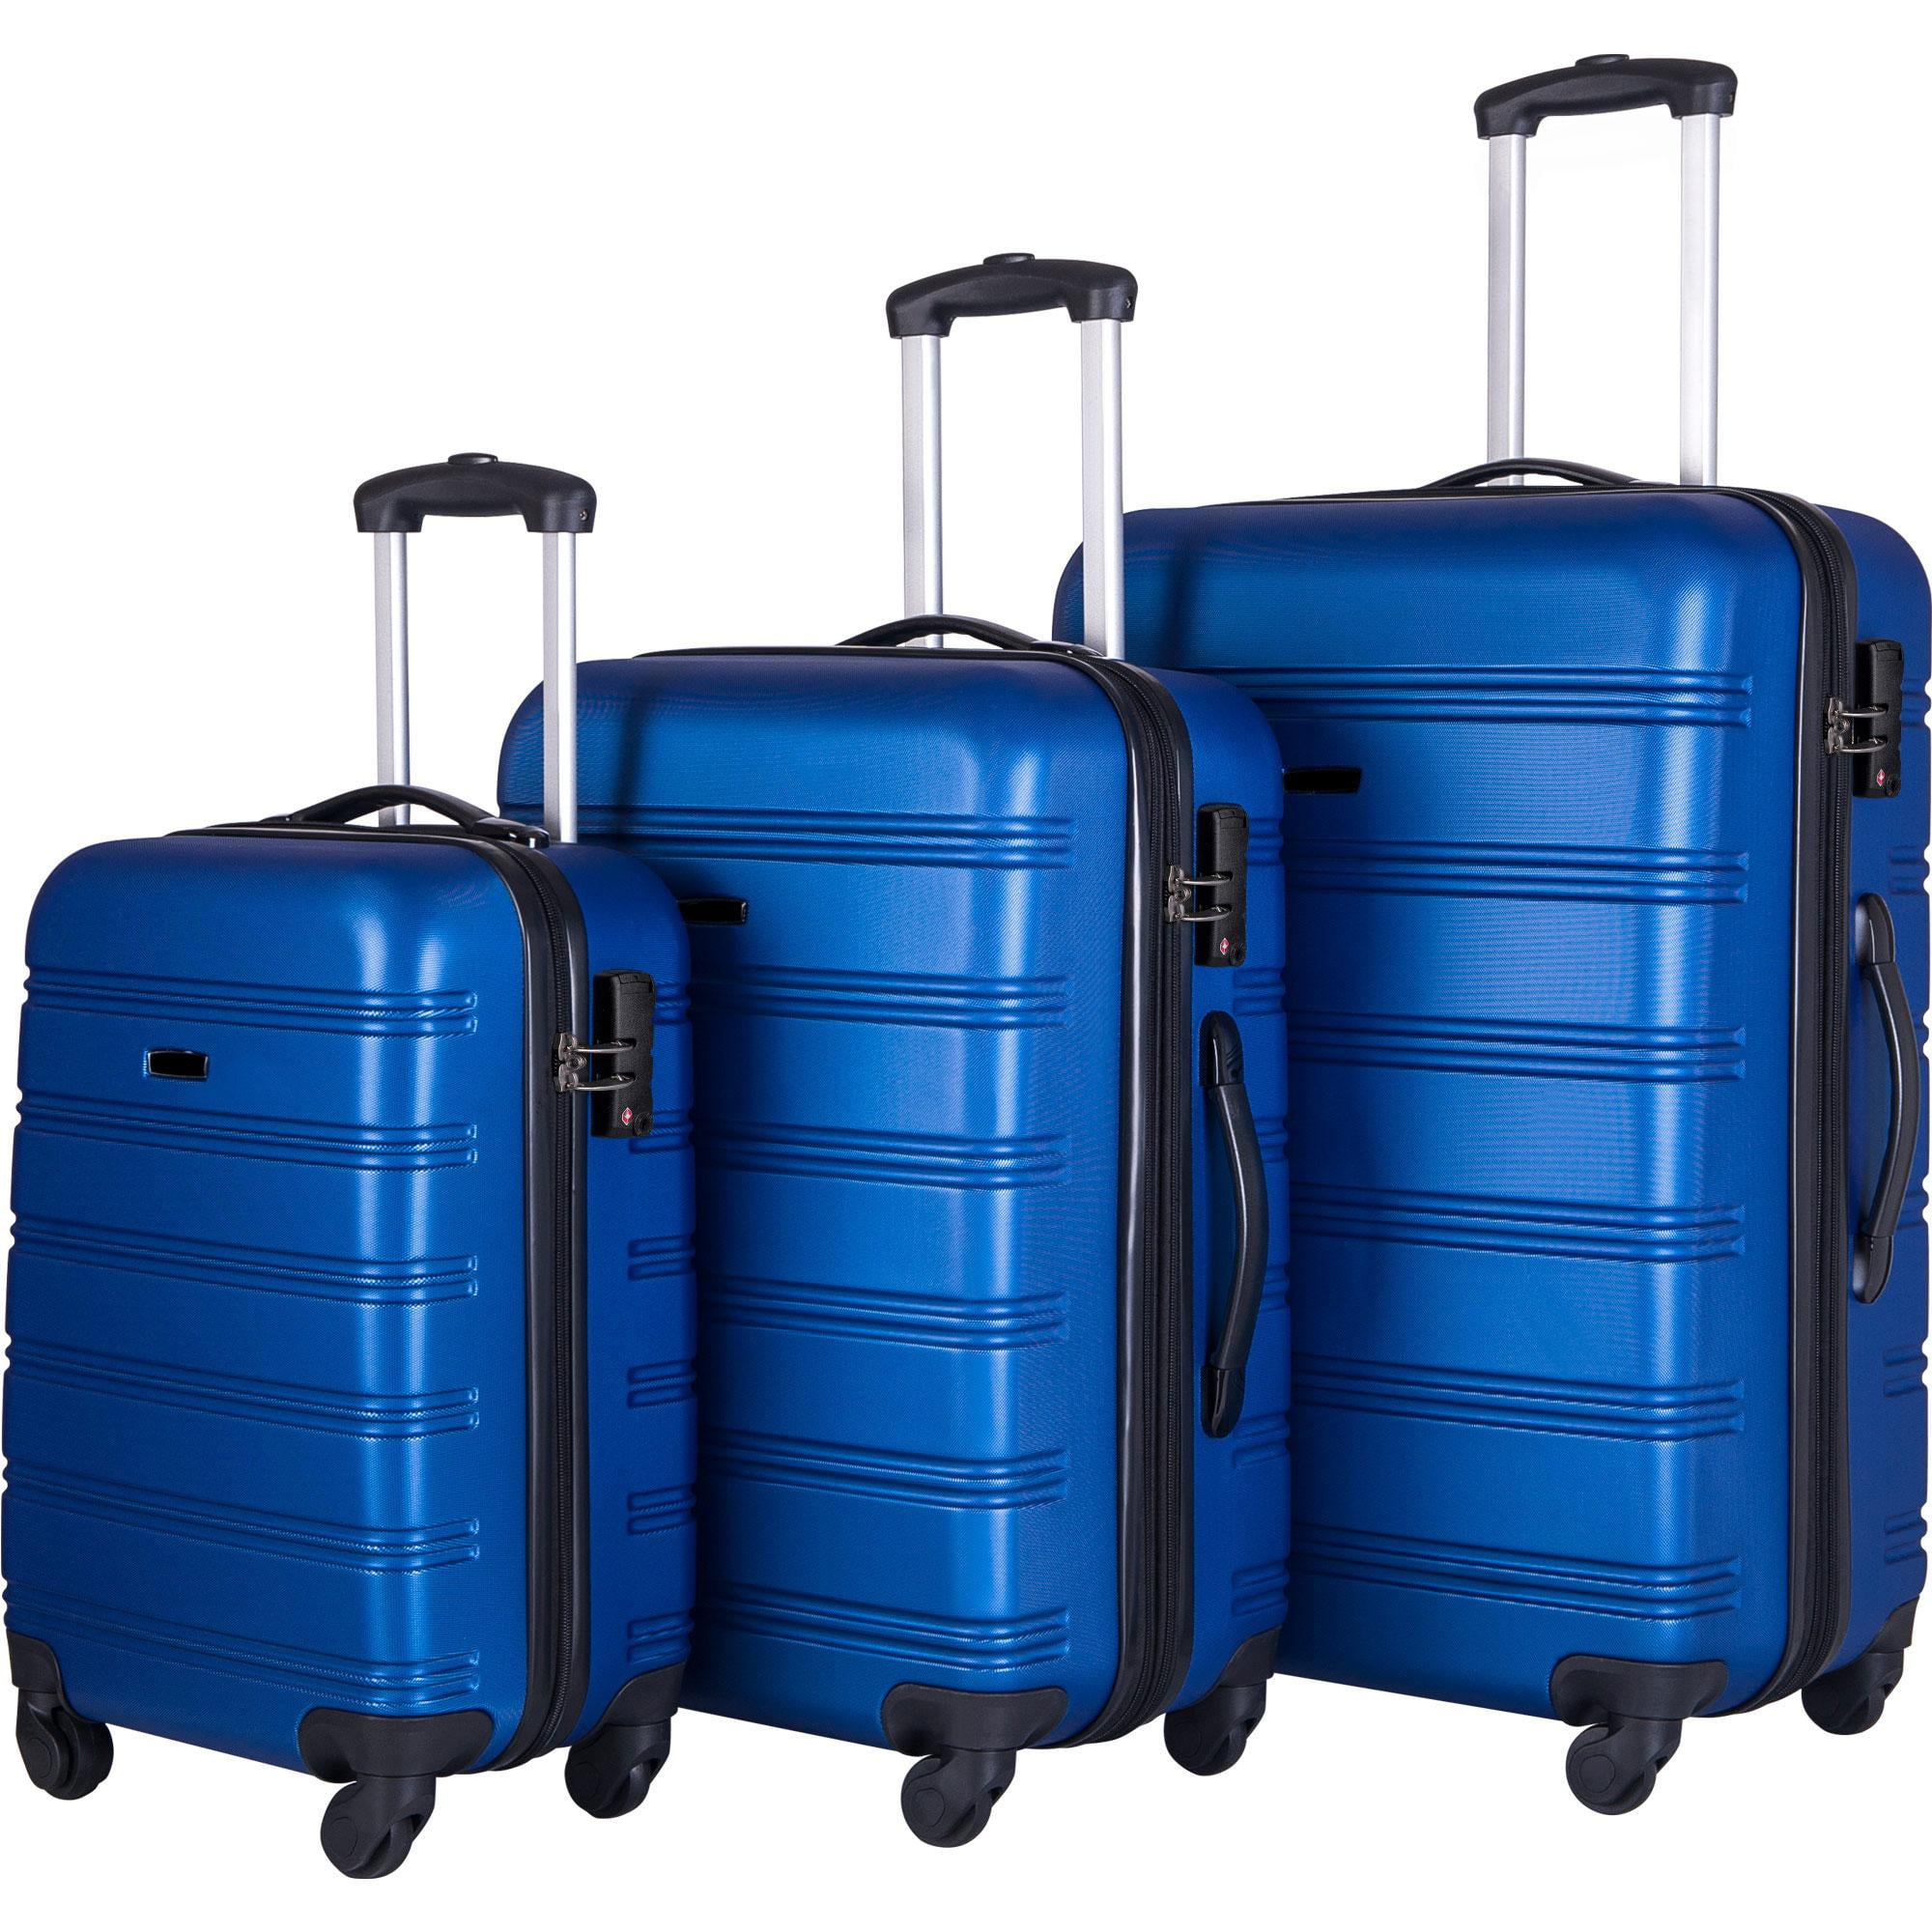  LARVENDER Luggage Sets, Luggage 4 Piece Set, Expandable Luggage  Set Clearance for Women Suitcsases with Spinner Wheels Hardside Luggage  with TSA Lock (Aqua Blue)